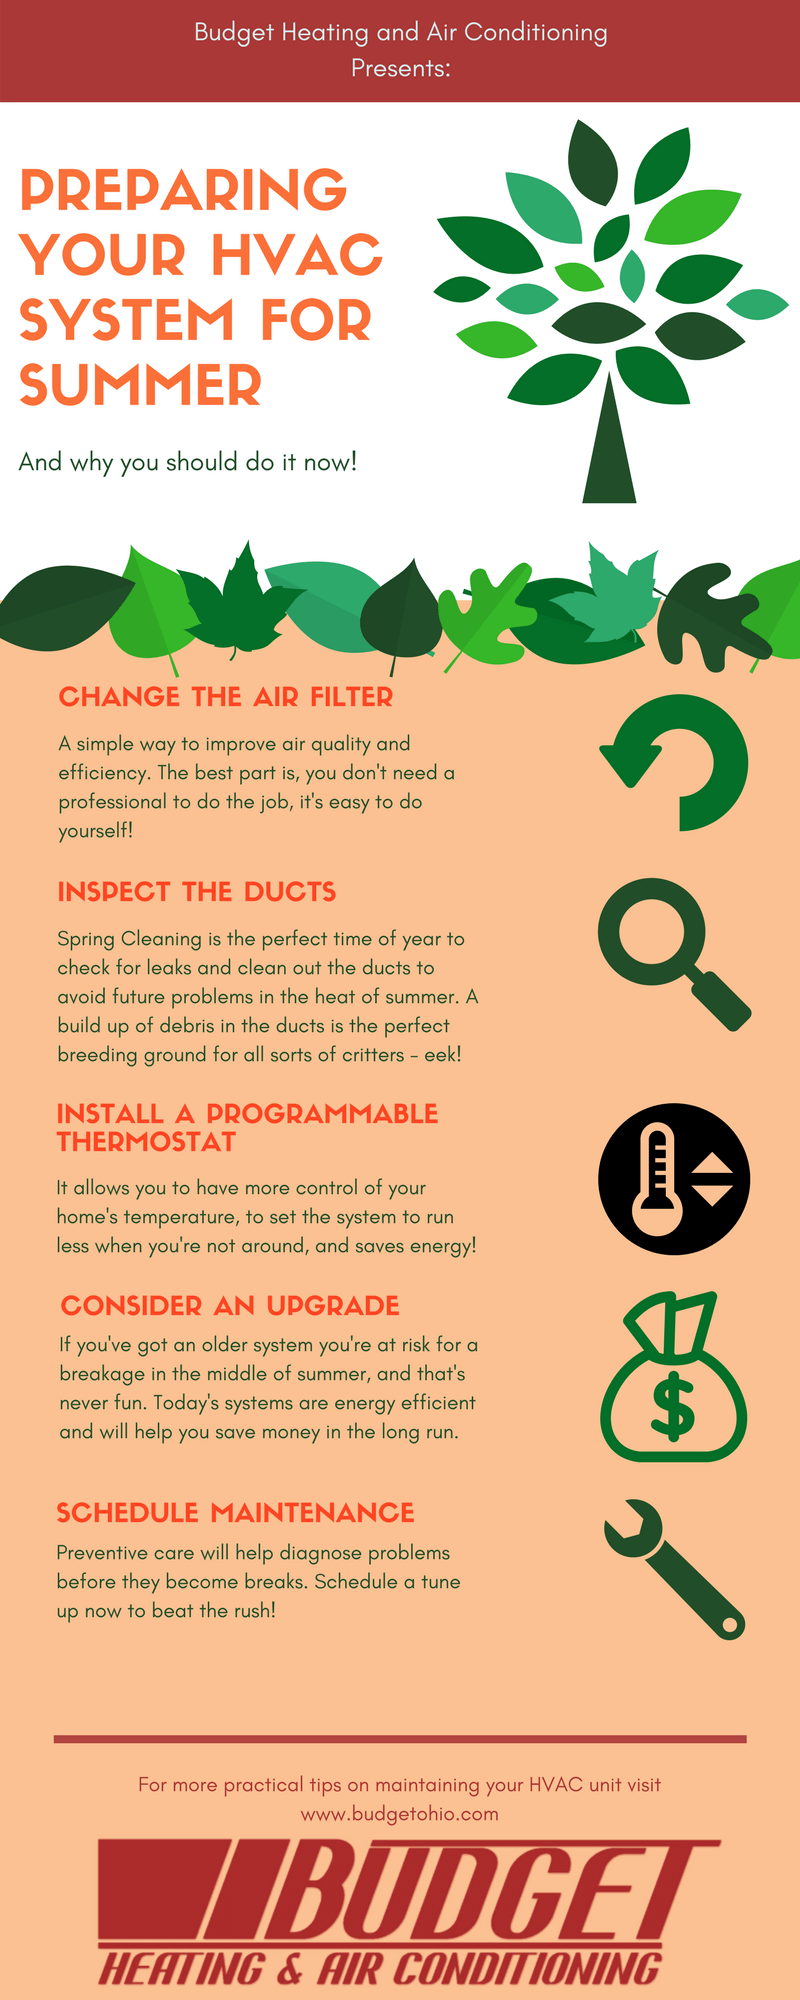 Tips for preparing your HVAC system for summer.